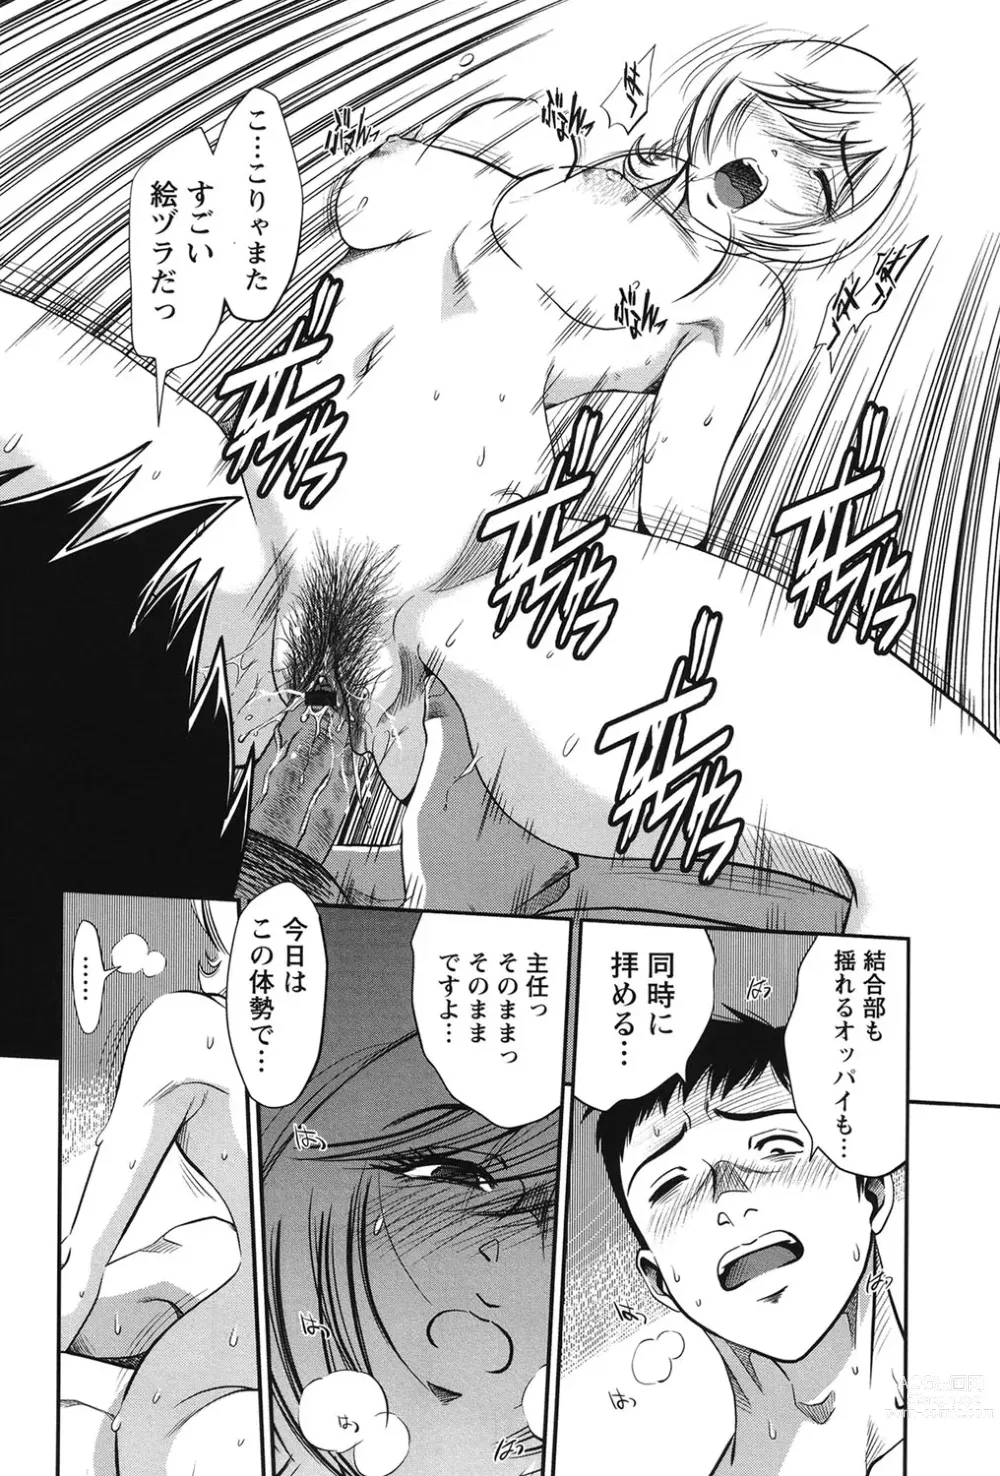 Page 189 of manga Melty Moon Ugly Man Rape